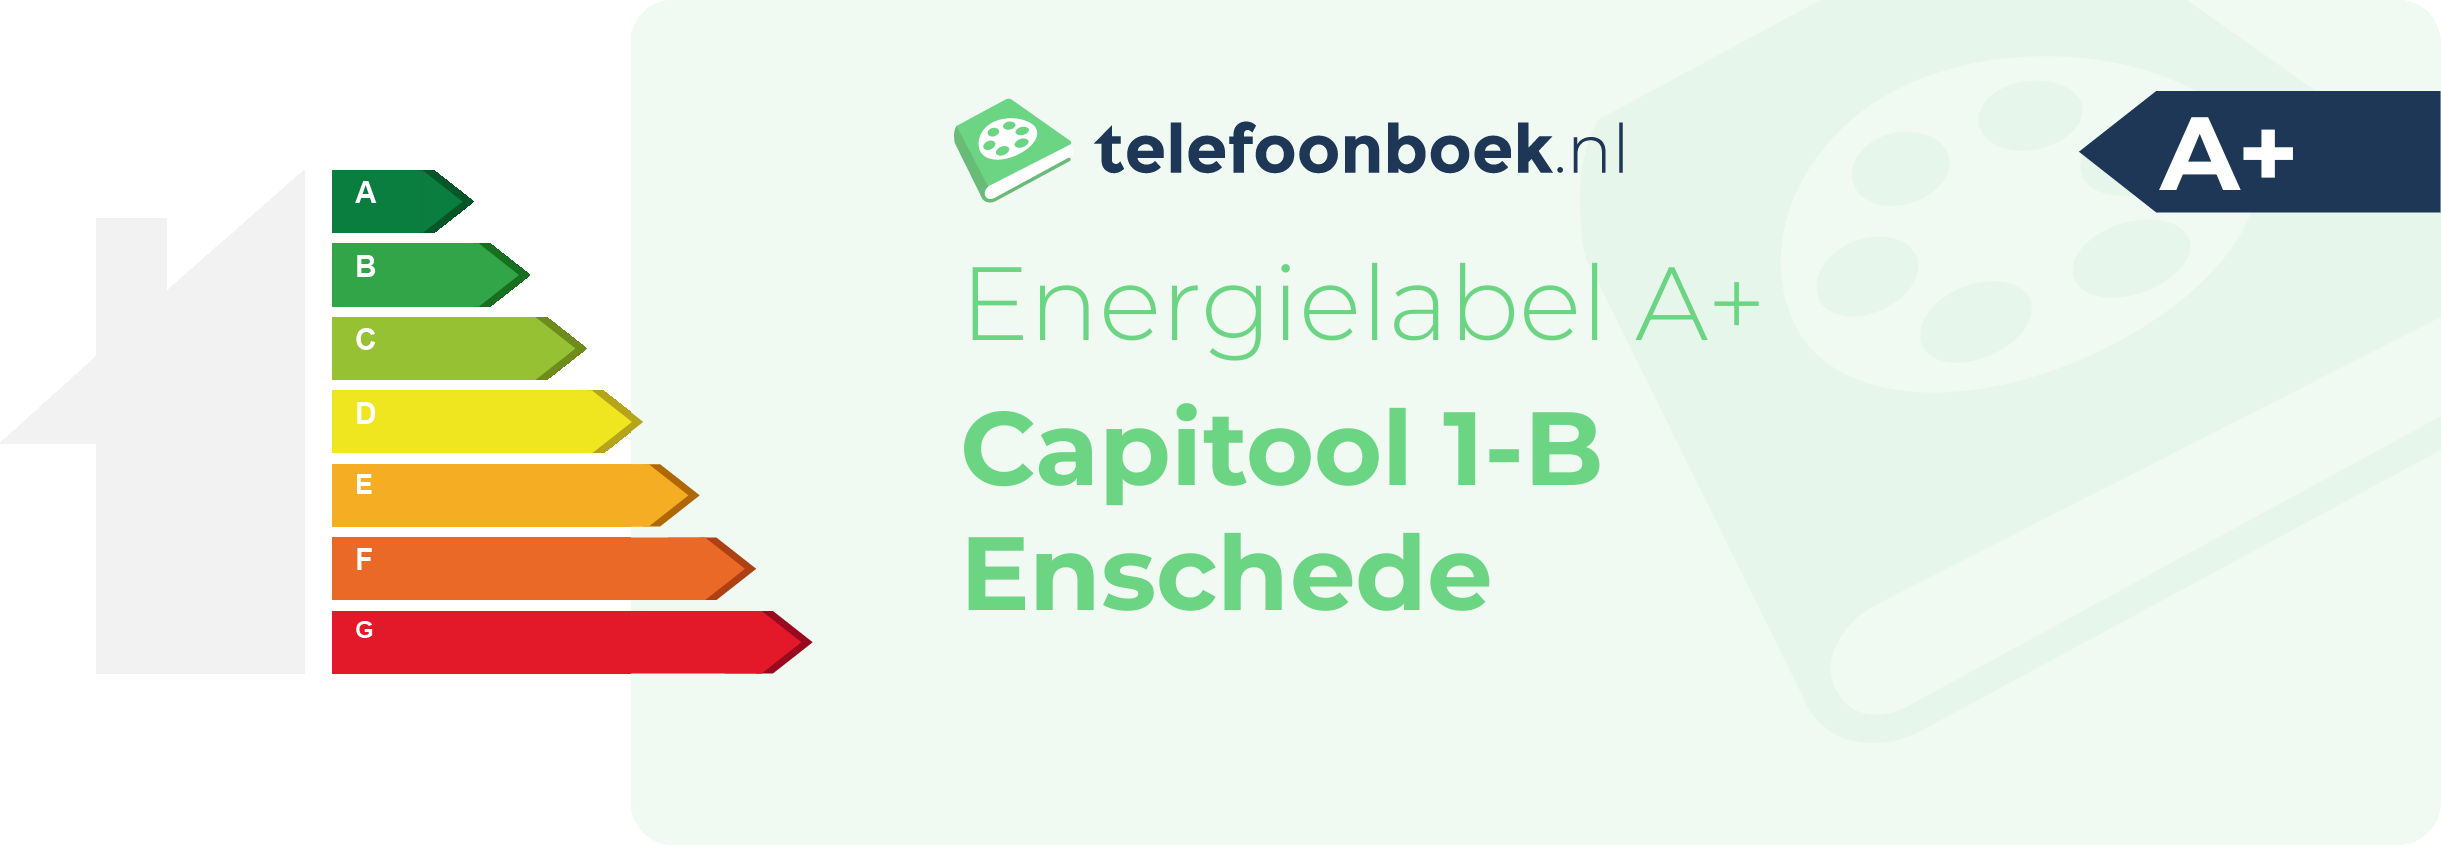 Energielabel Capitool 1-B Enschede